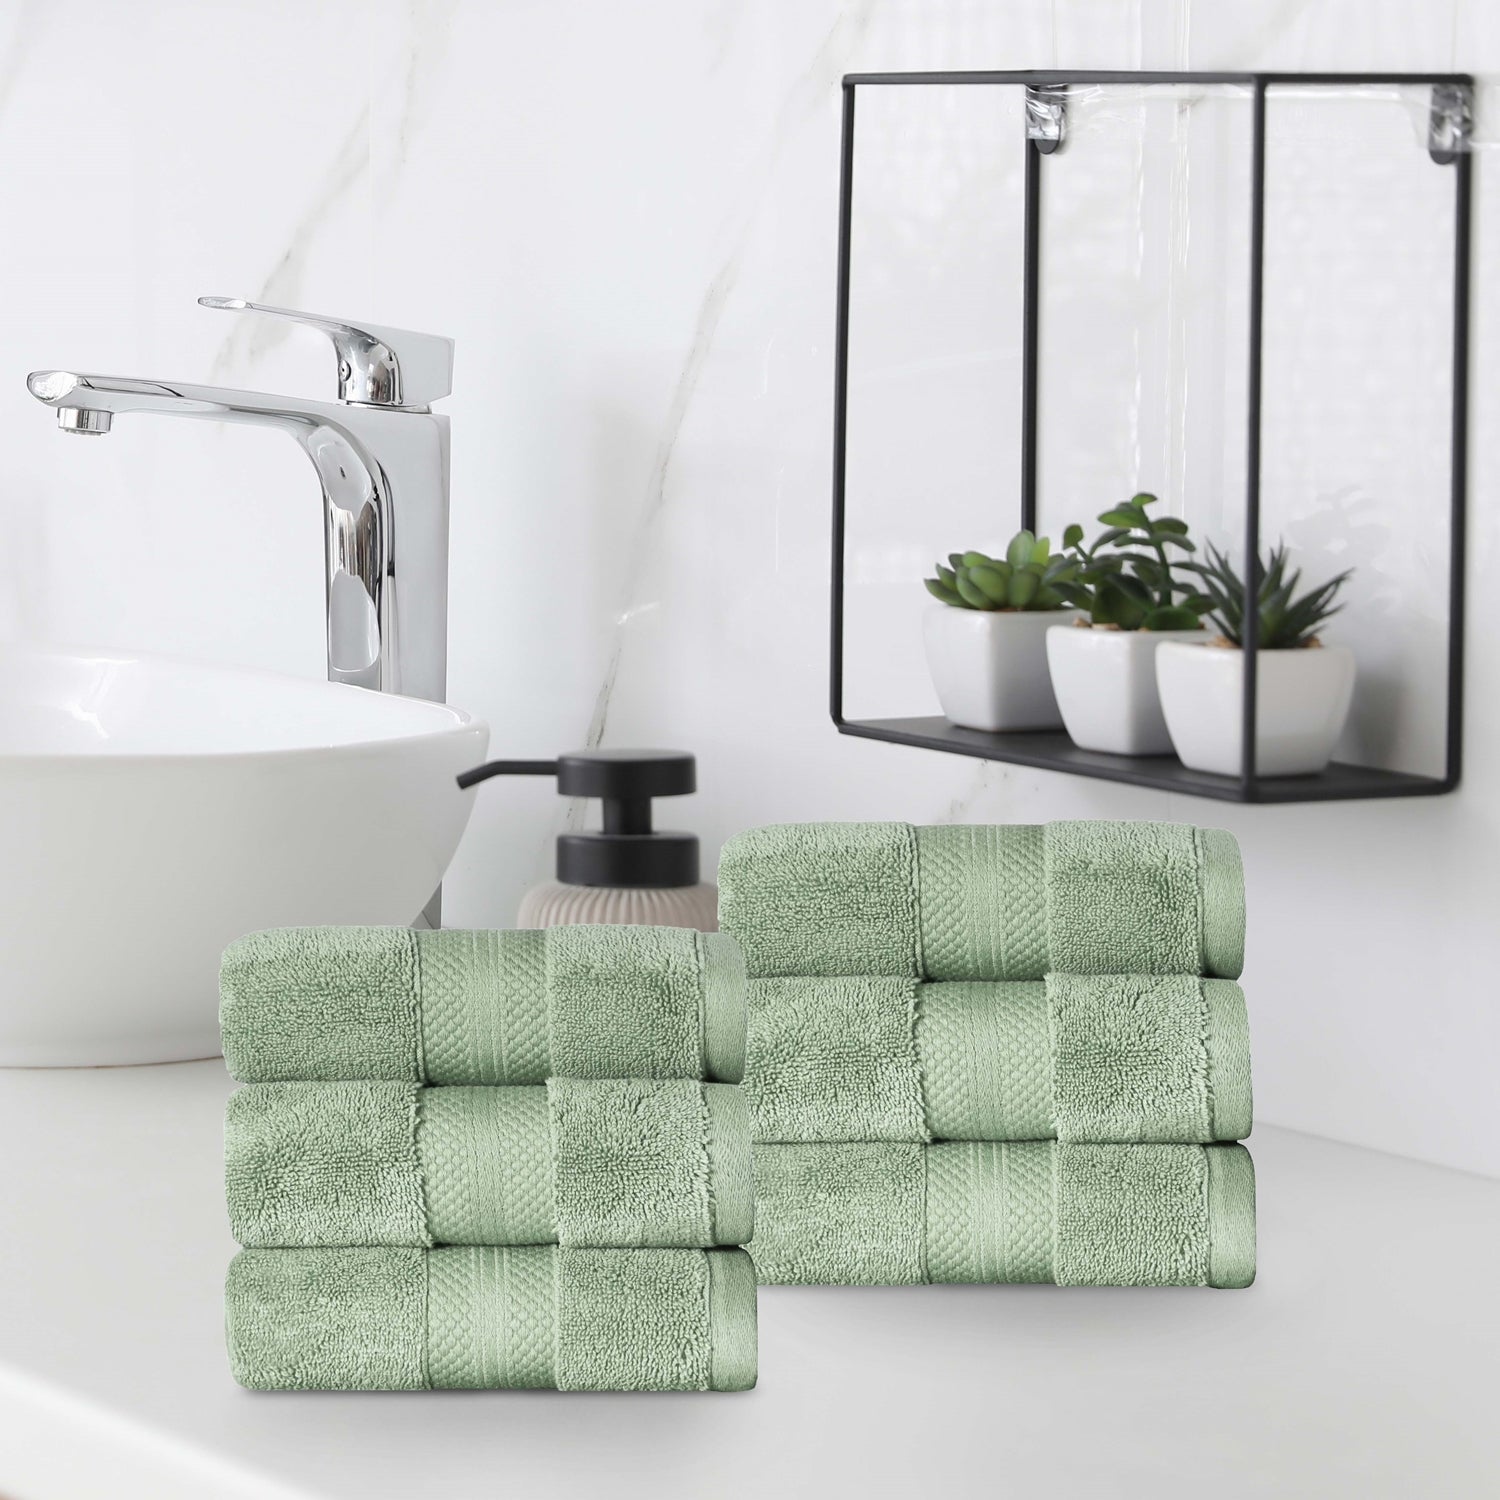 Superior Premium Turkish-Cotton Assorted Towel Set - Olive Green